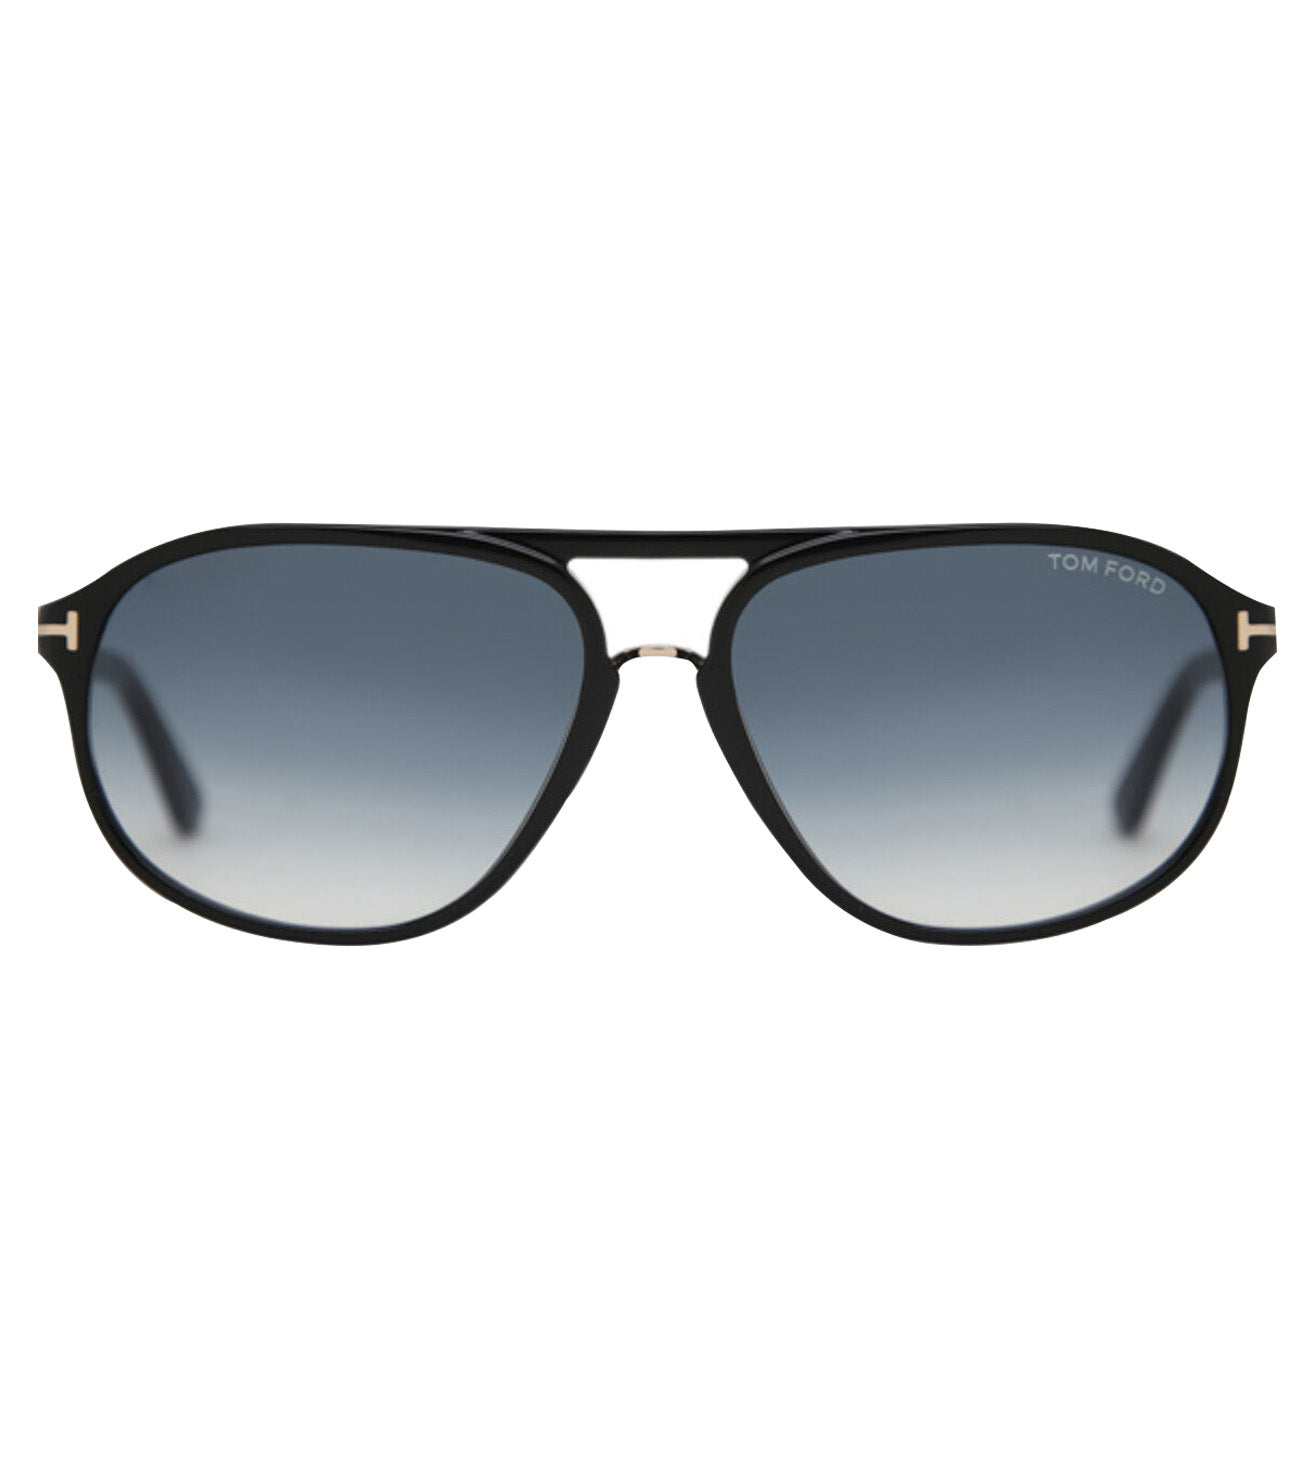 Tom Ford Men's Green Gradient Aviator Sunglasses